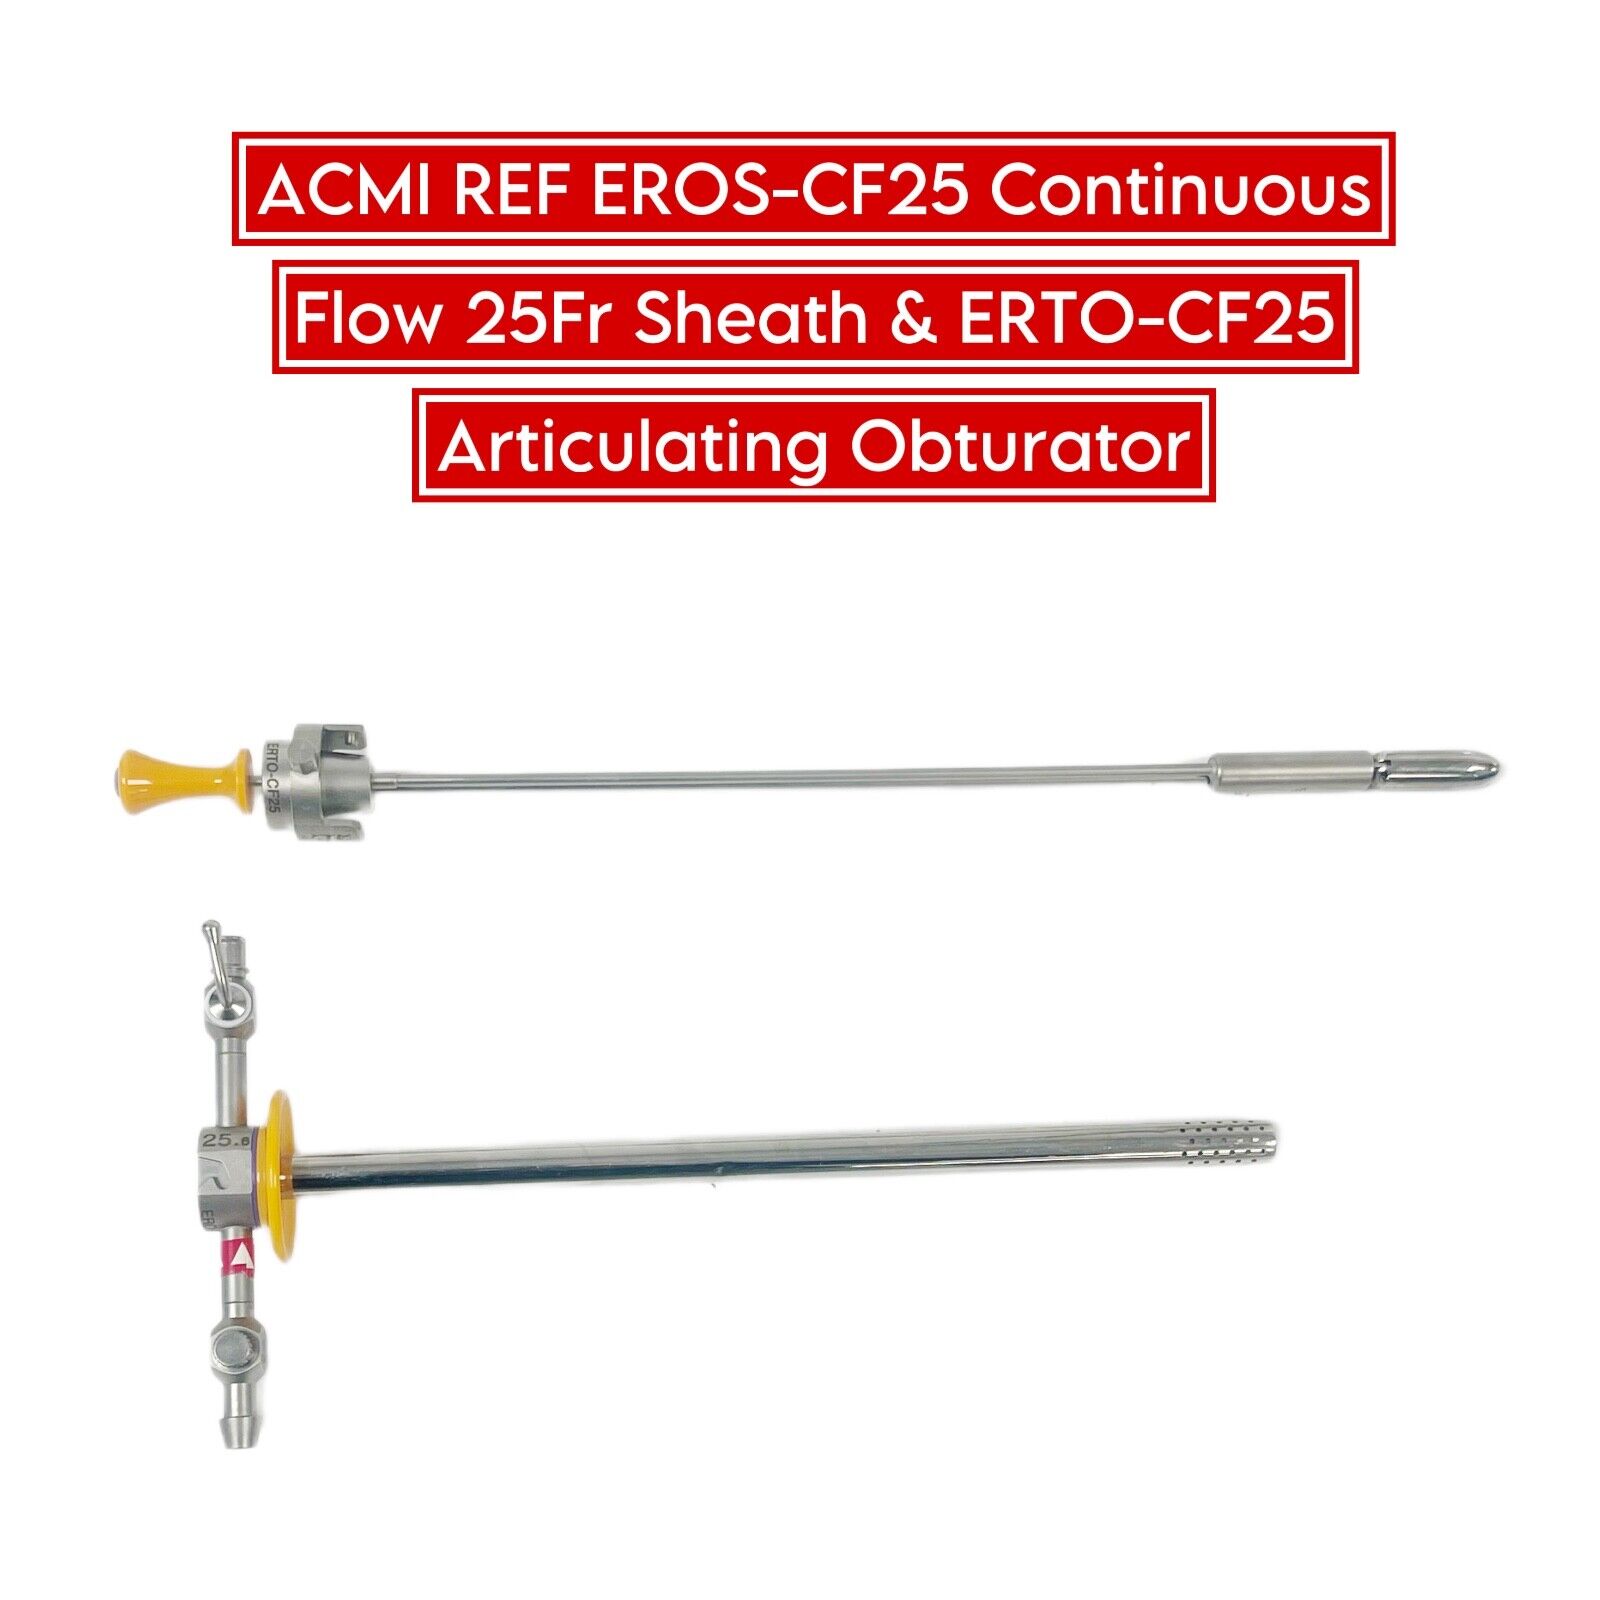 Gyrus ACMI REF EROS-CF25 Continuous Flow 25Fr Sheath & ERTO-CF25 Obturator